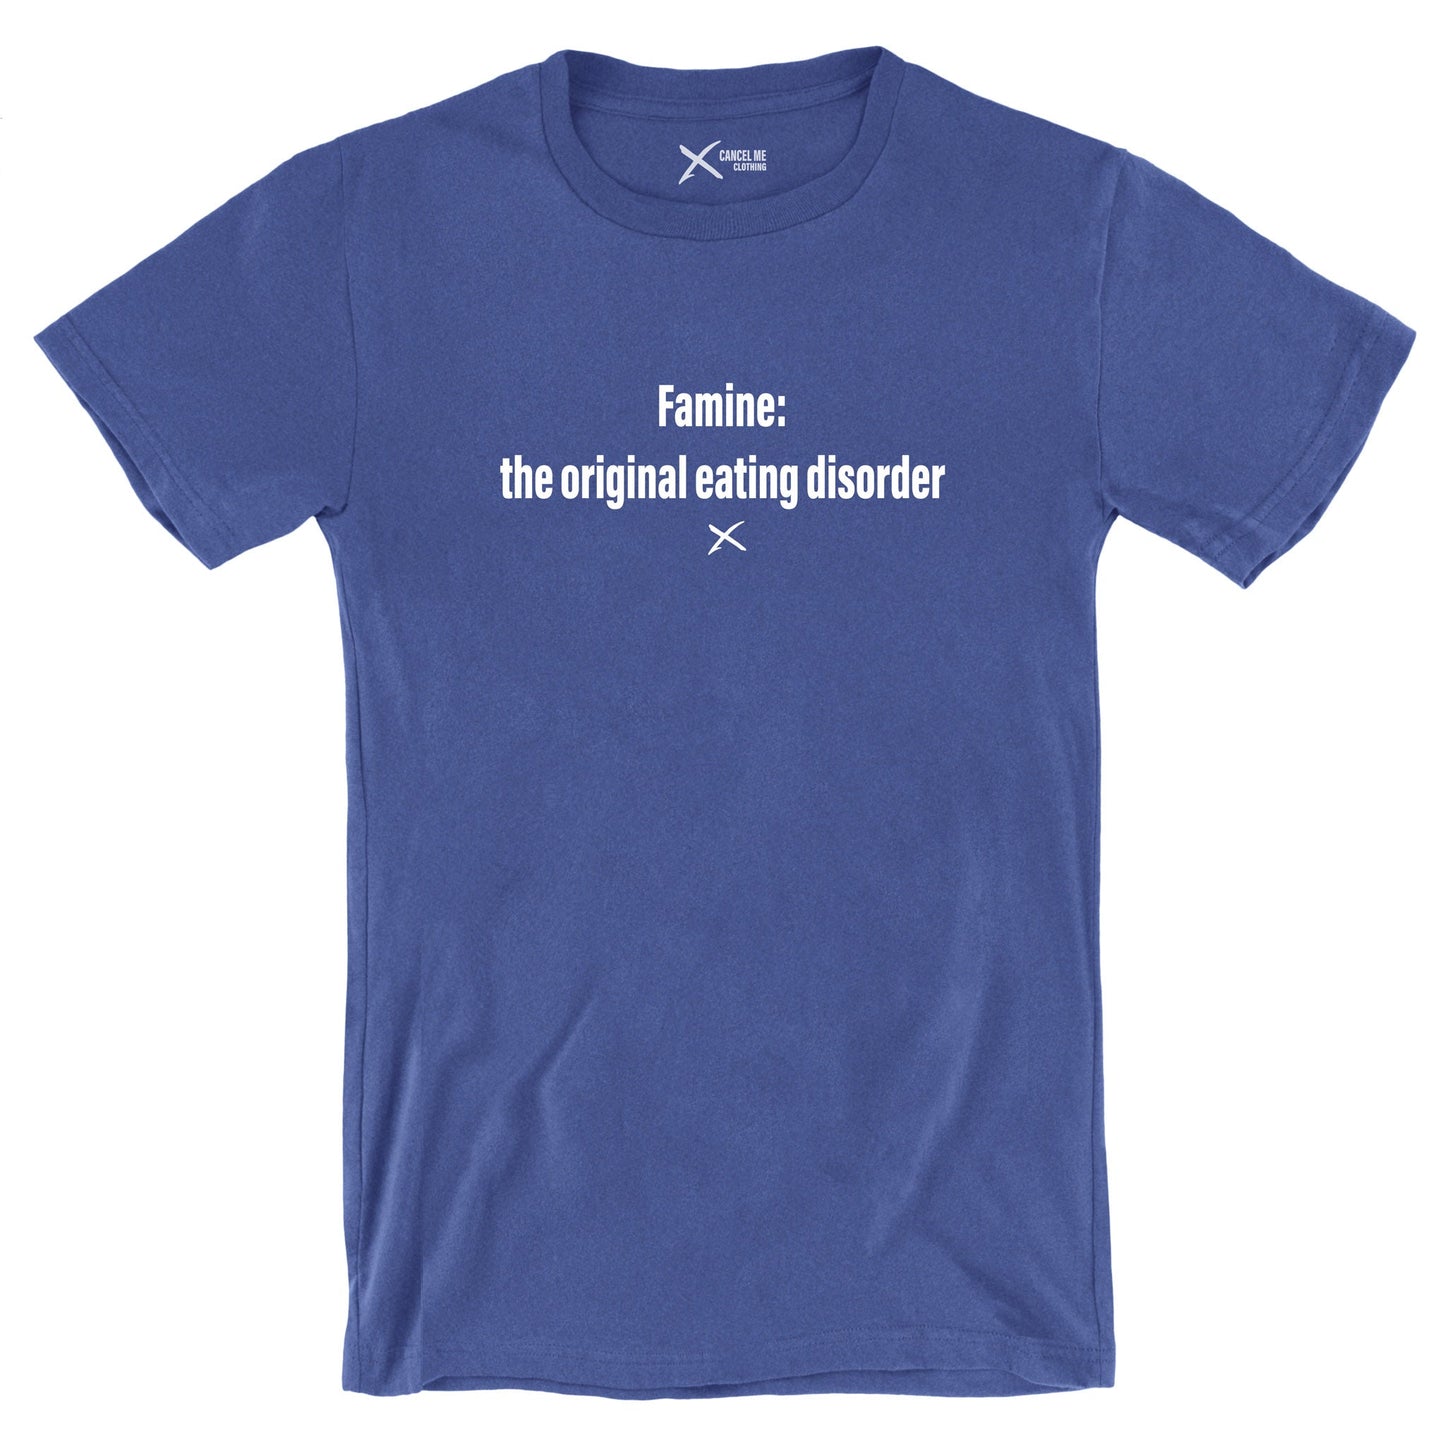 Famine: the original eating disorder - Shirt